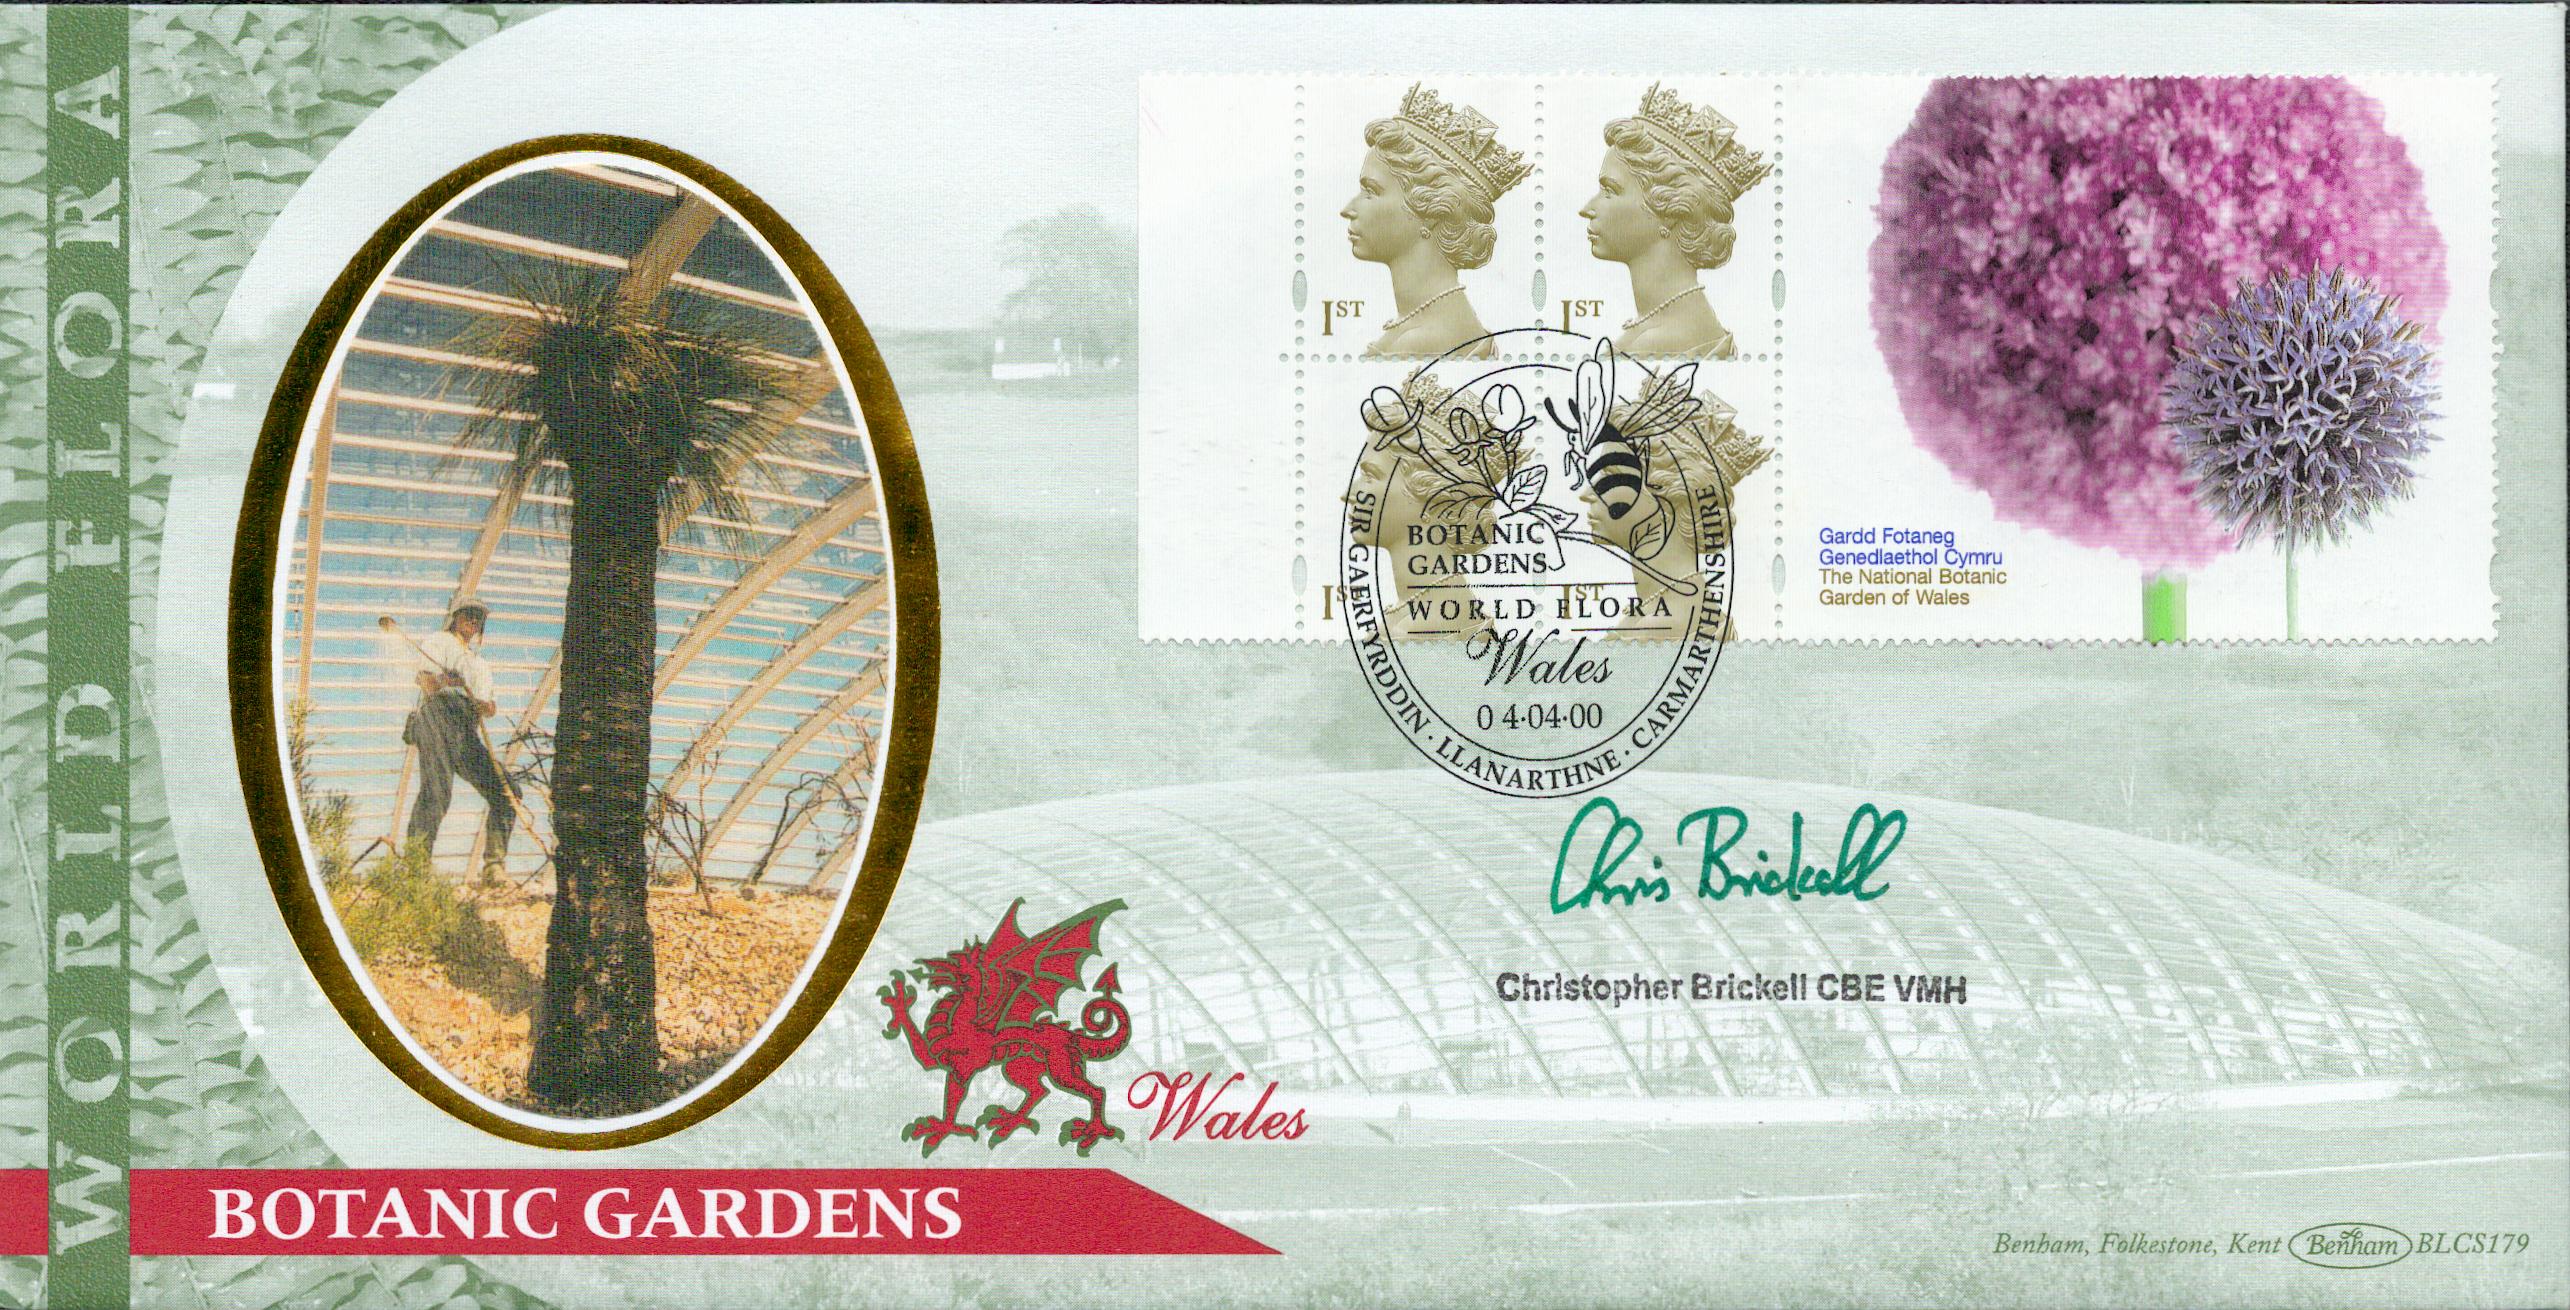 Christopher Brickell signed Botanic Gardens FDC. 4/4/00 Carmarthenshire postmark Good condition.